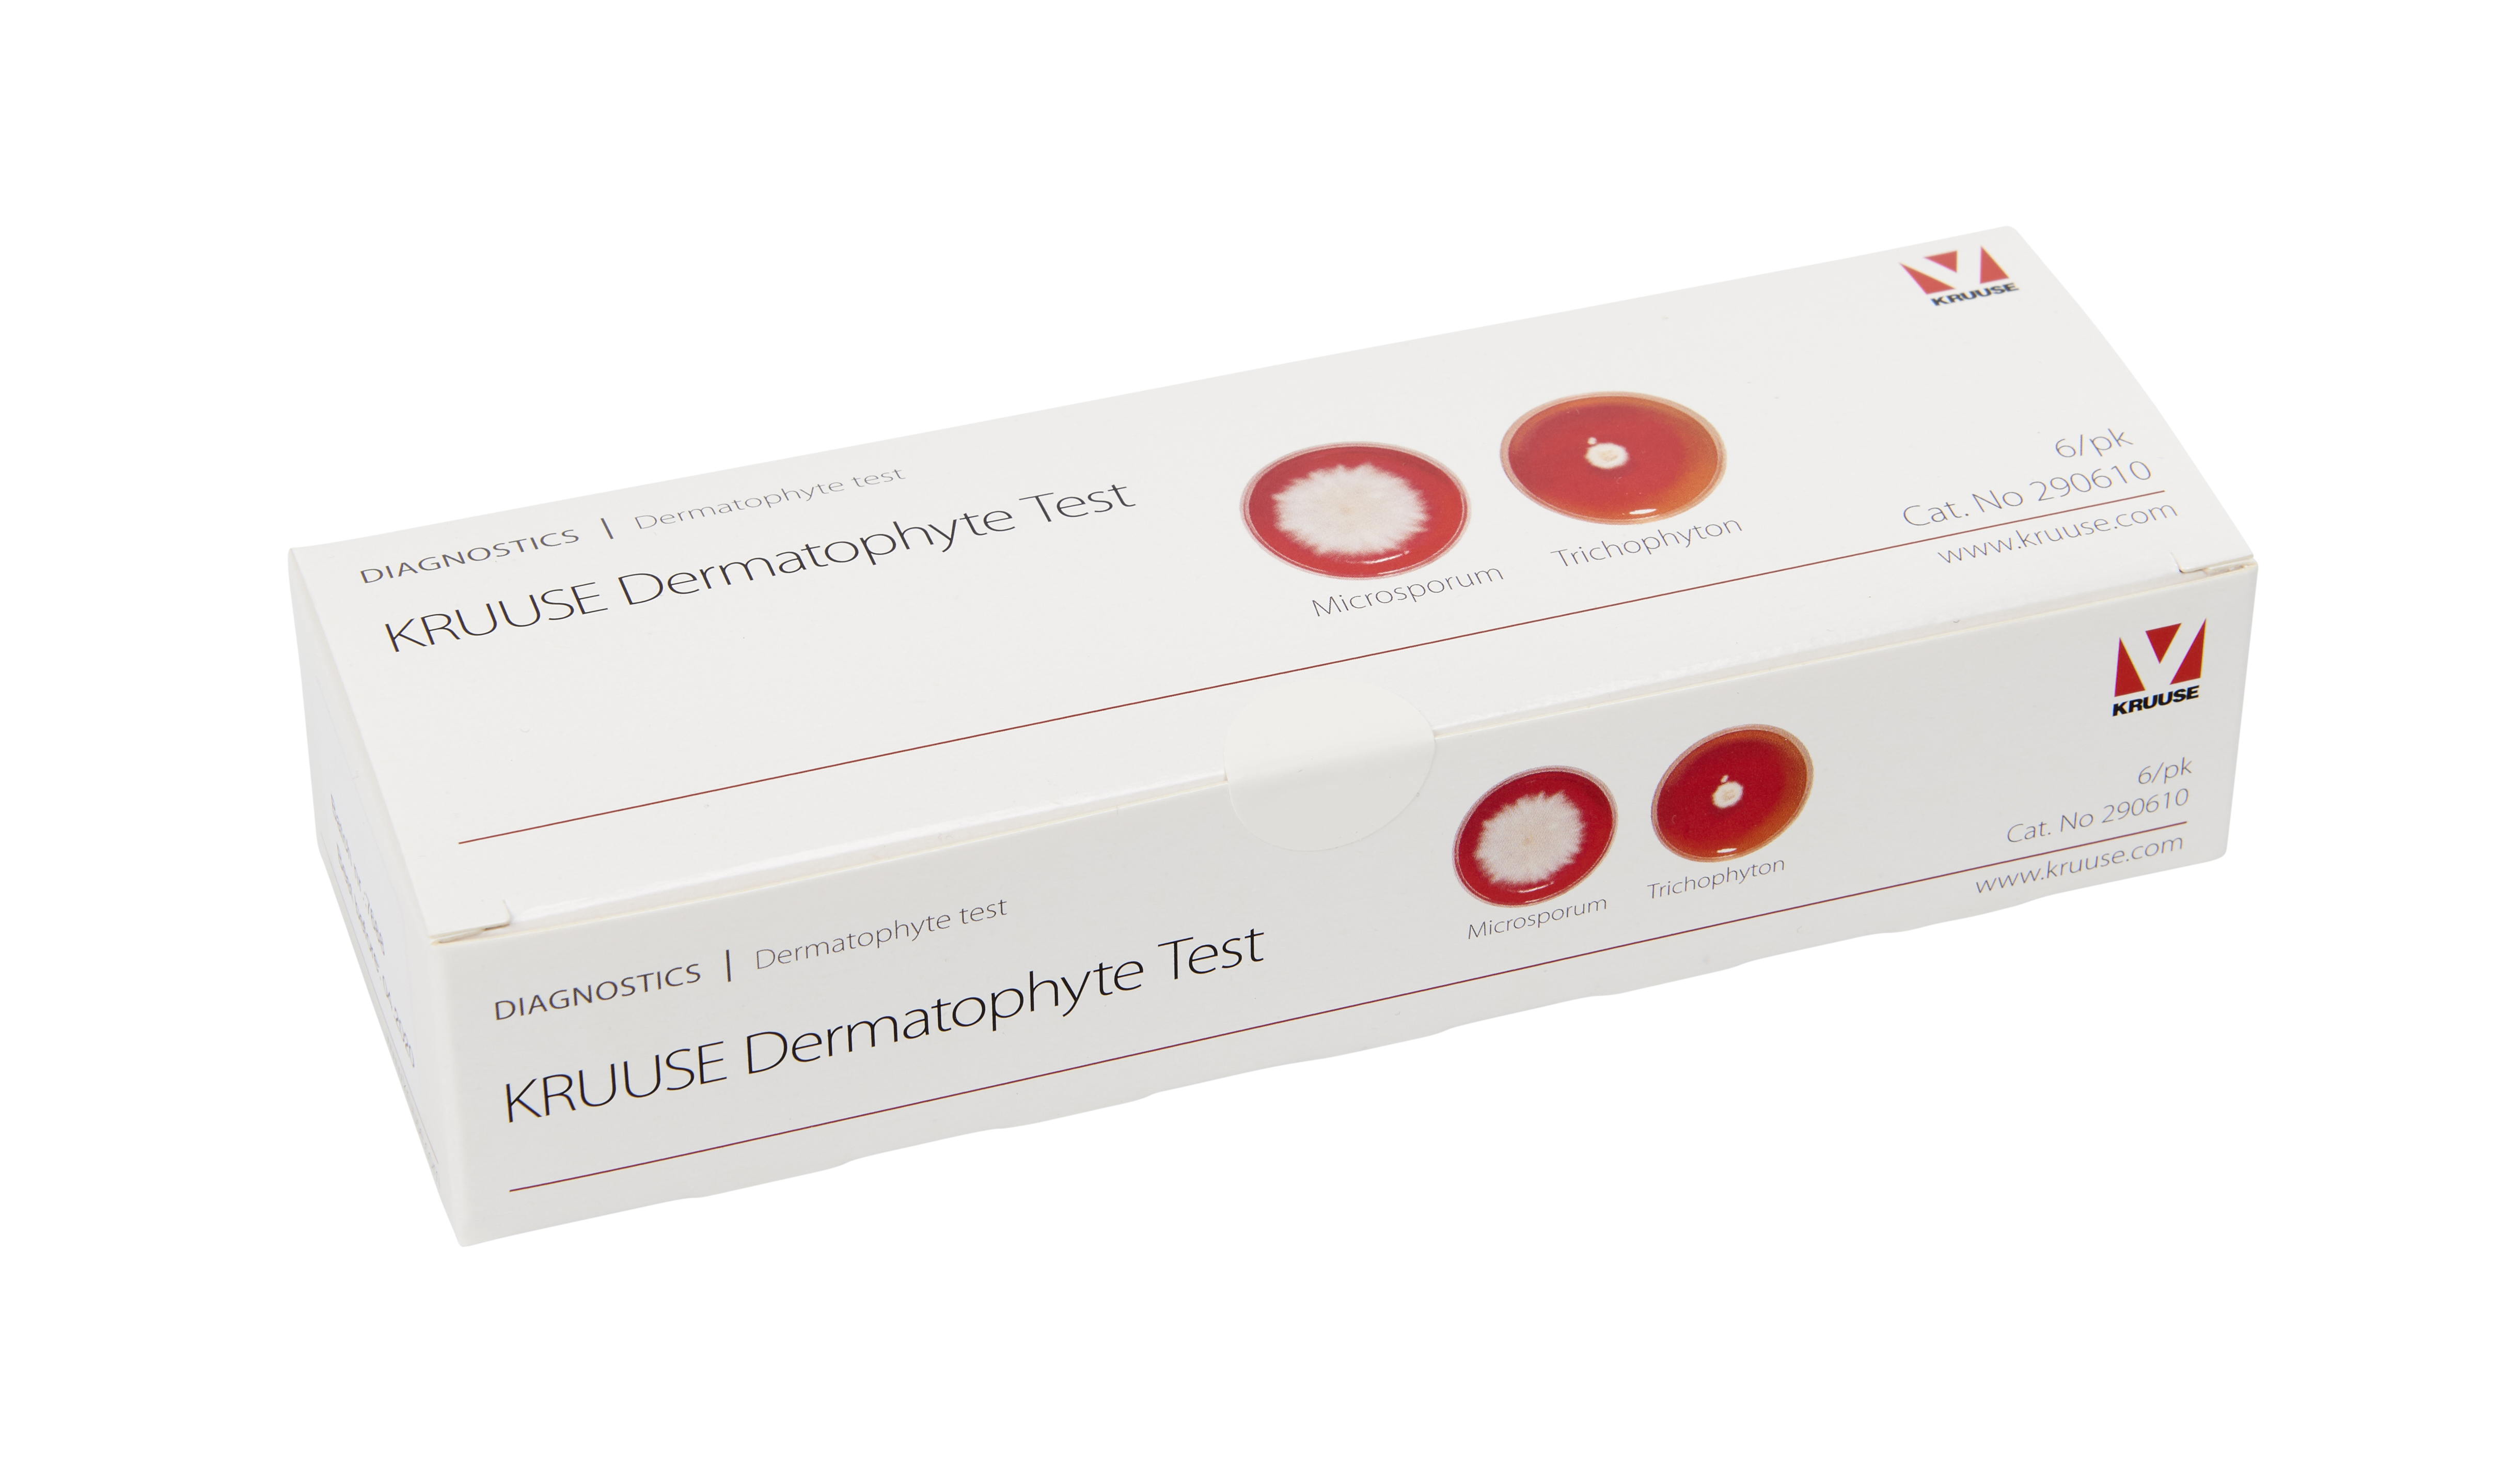 KRUUSE Dermatophyte test, 6/pk